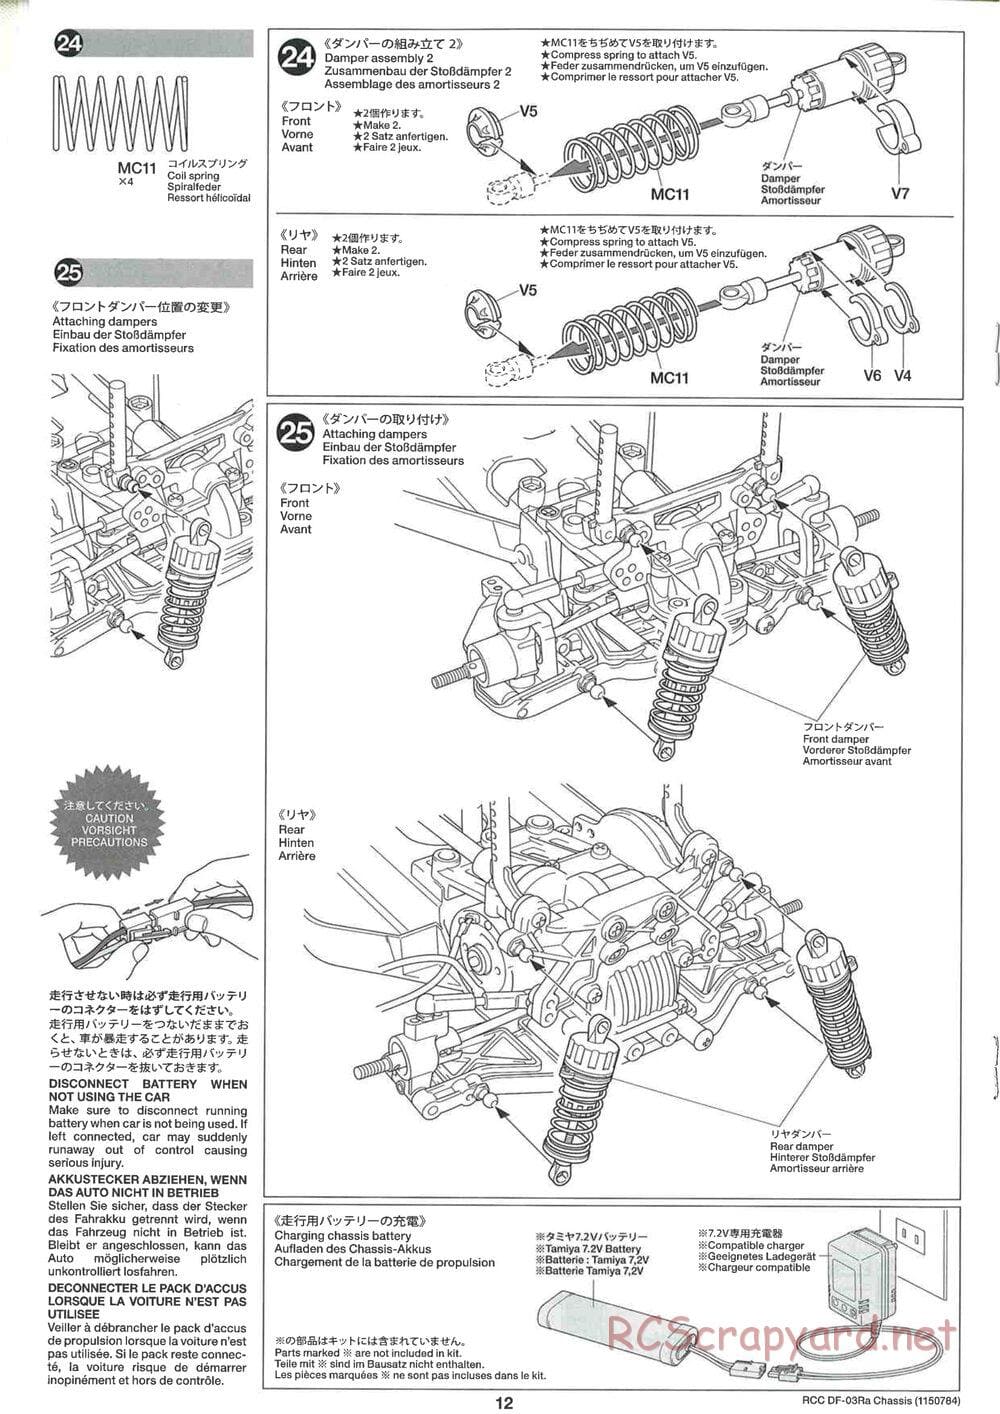 Tamiya - DF-03Ra Chassis - Manual - Page 12